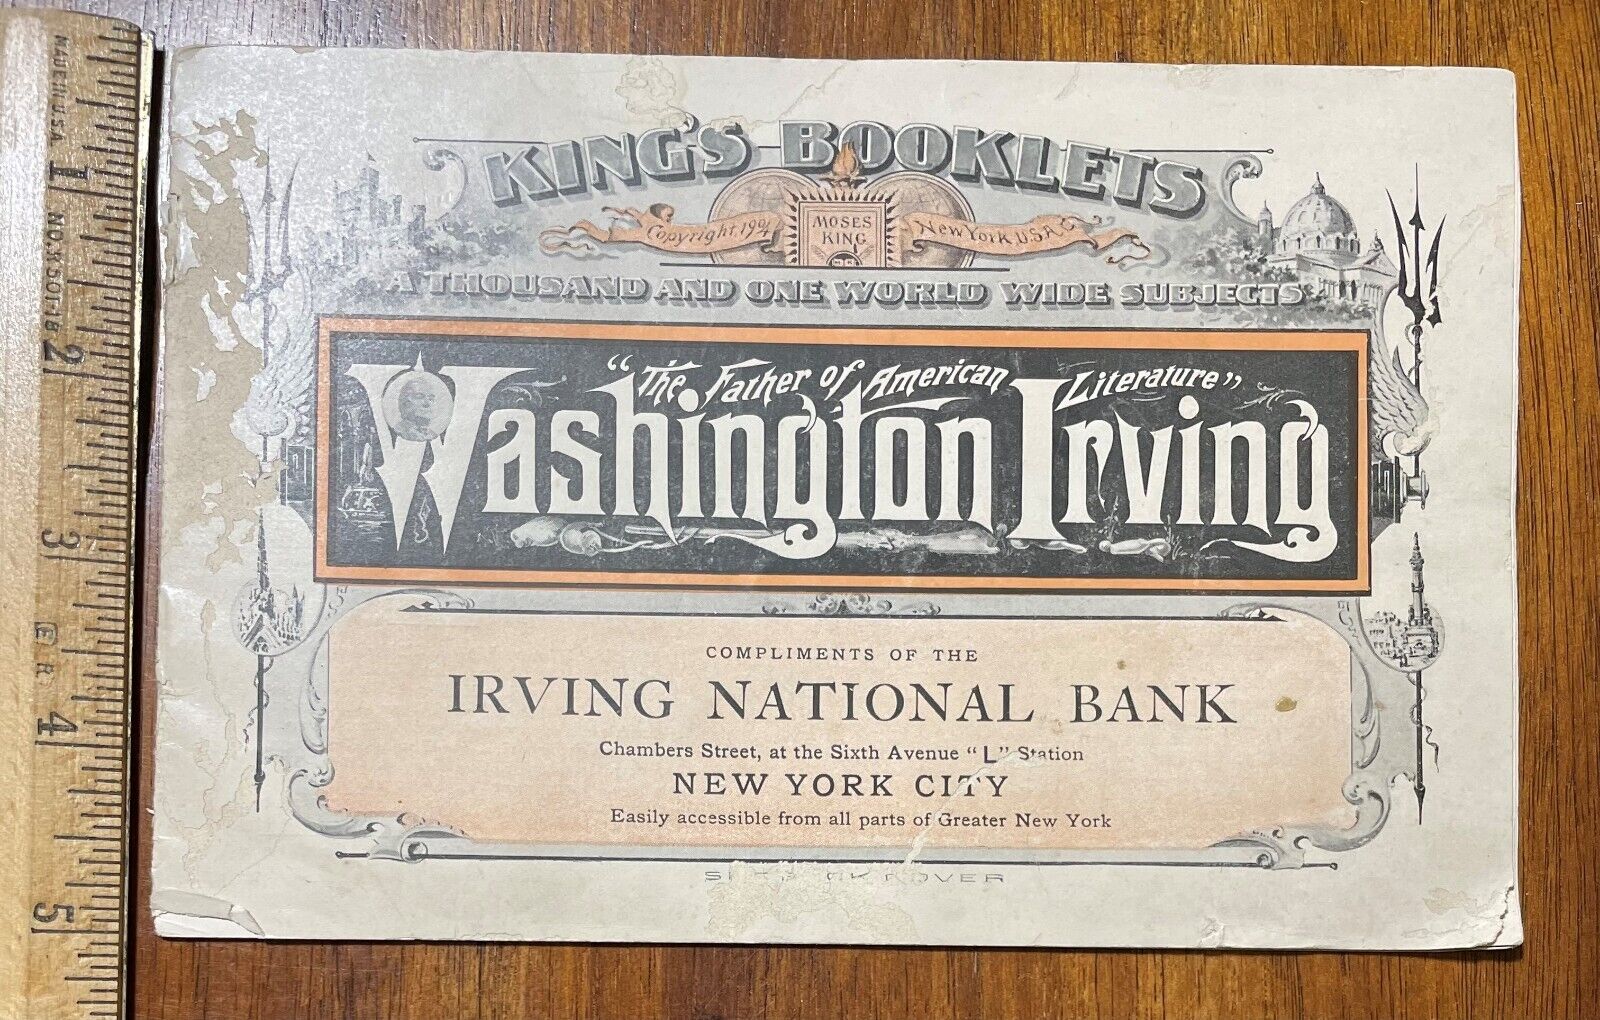 King\'s Booklet Washington Irving National Bank Sleepy Hollow photos NYC 1900s